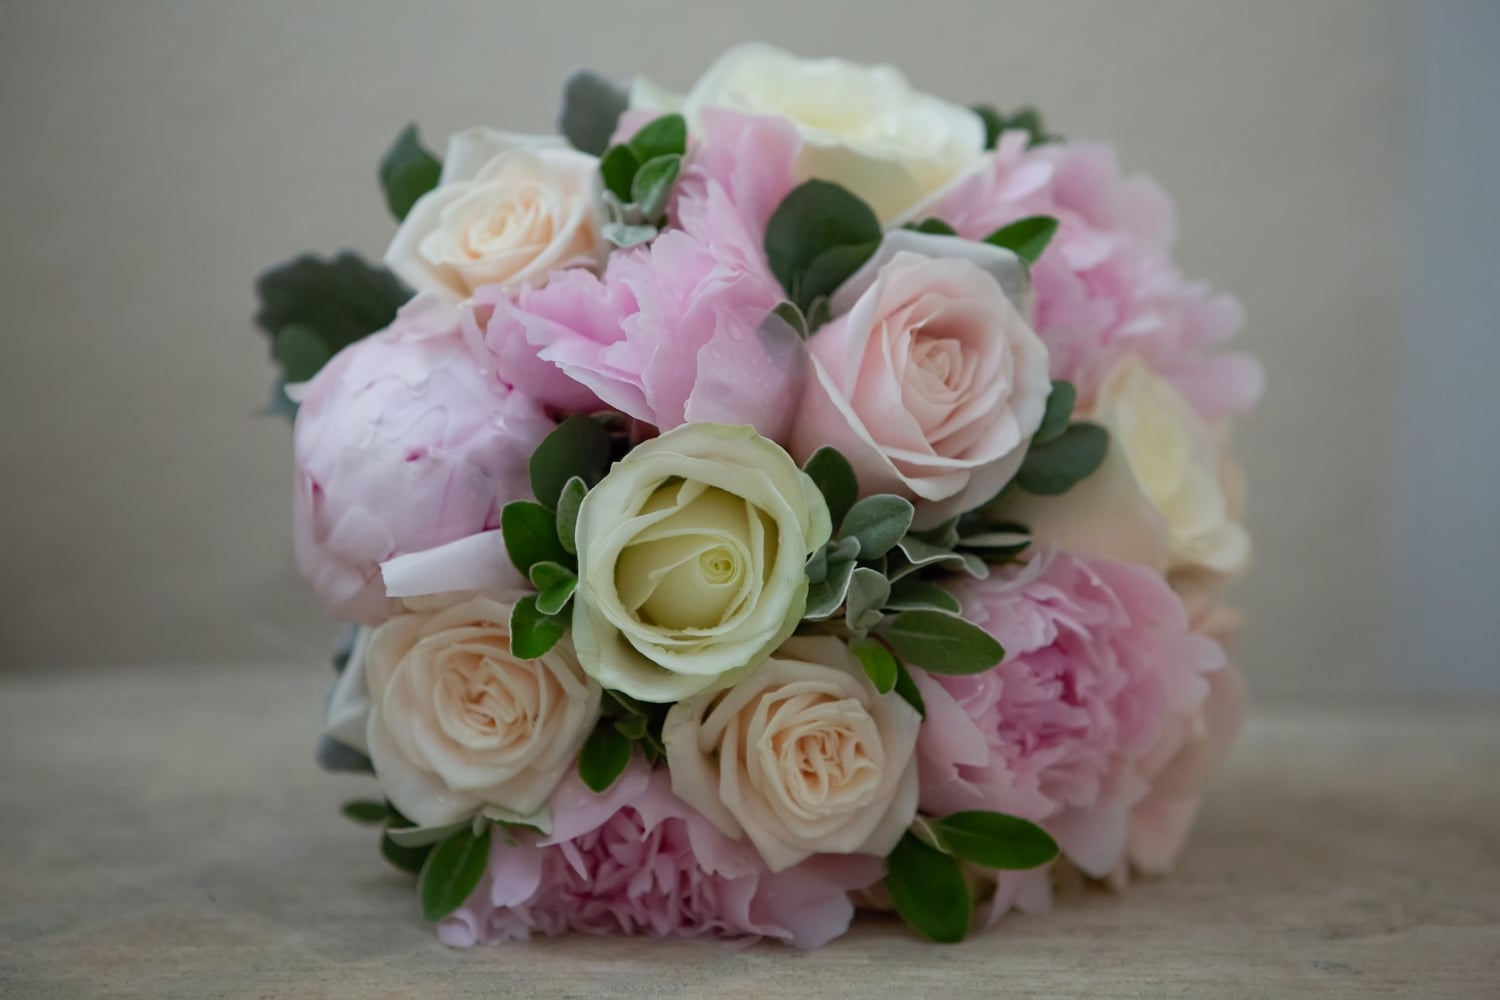 Bridal bouquet from Vandella Flowers, Carlisle